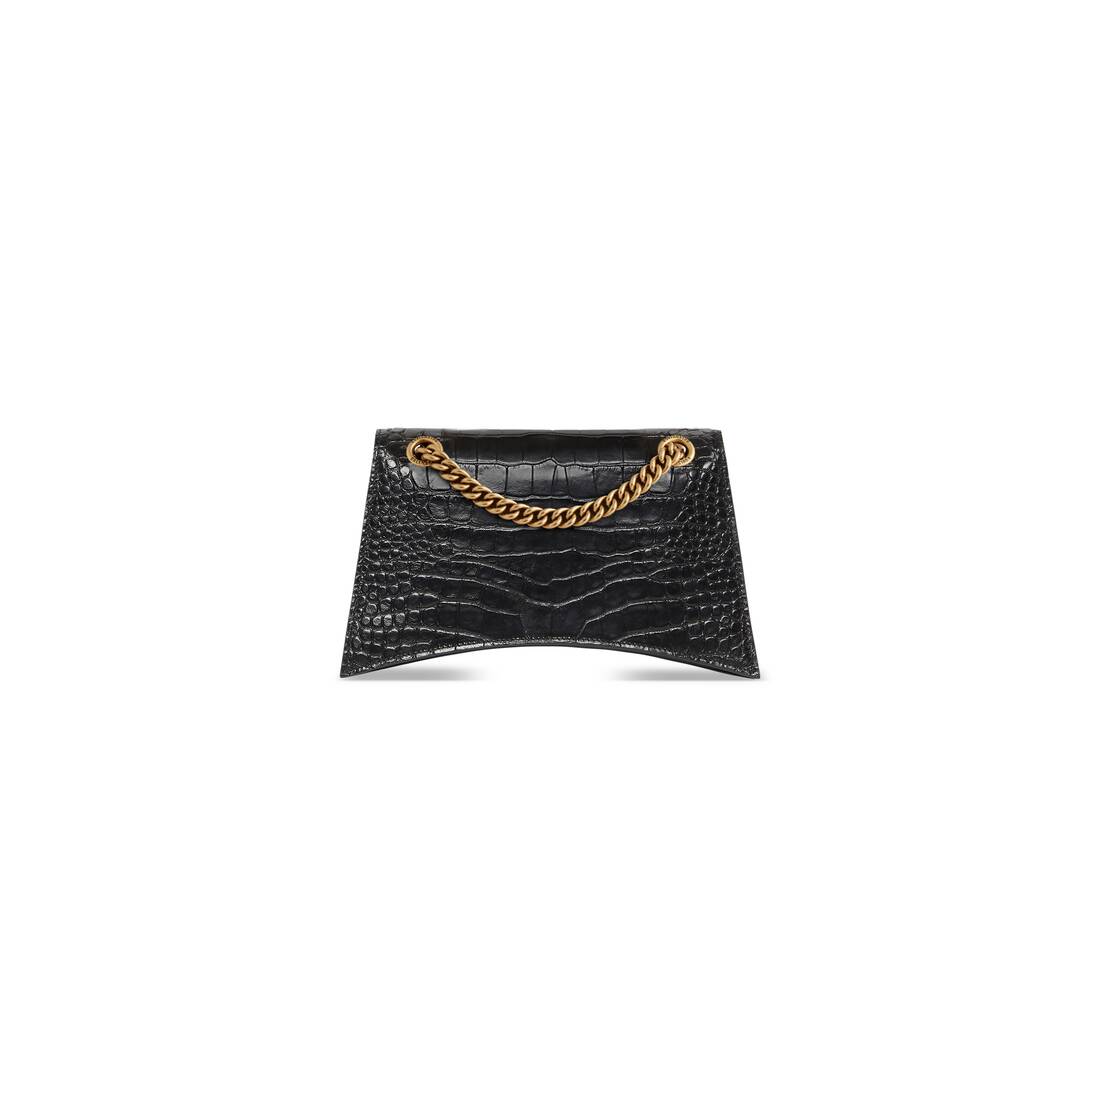 FENDI triplet studs clutch bag pouch calfskin leather black gold